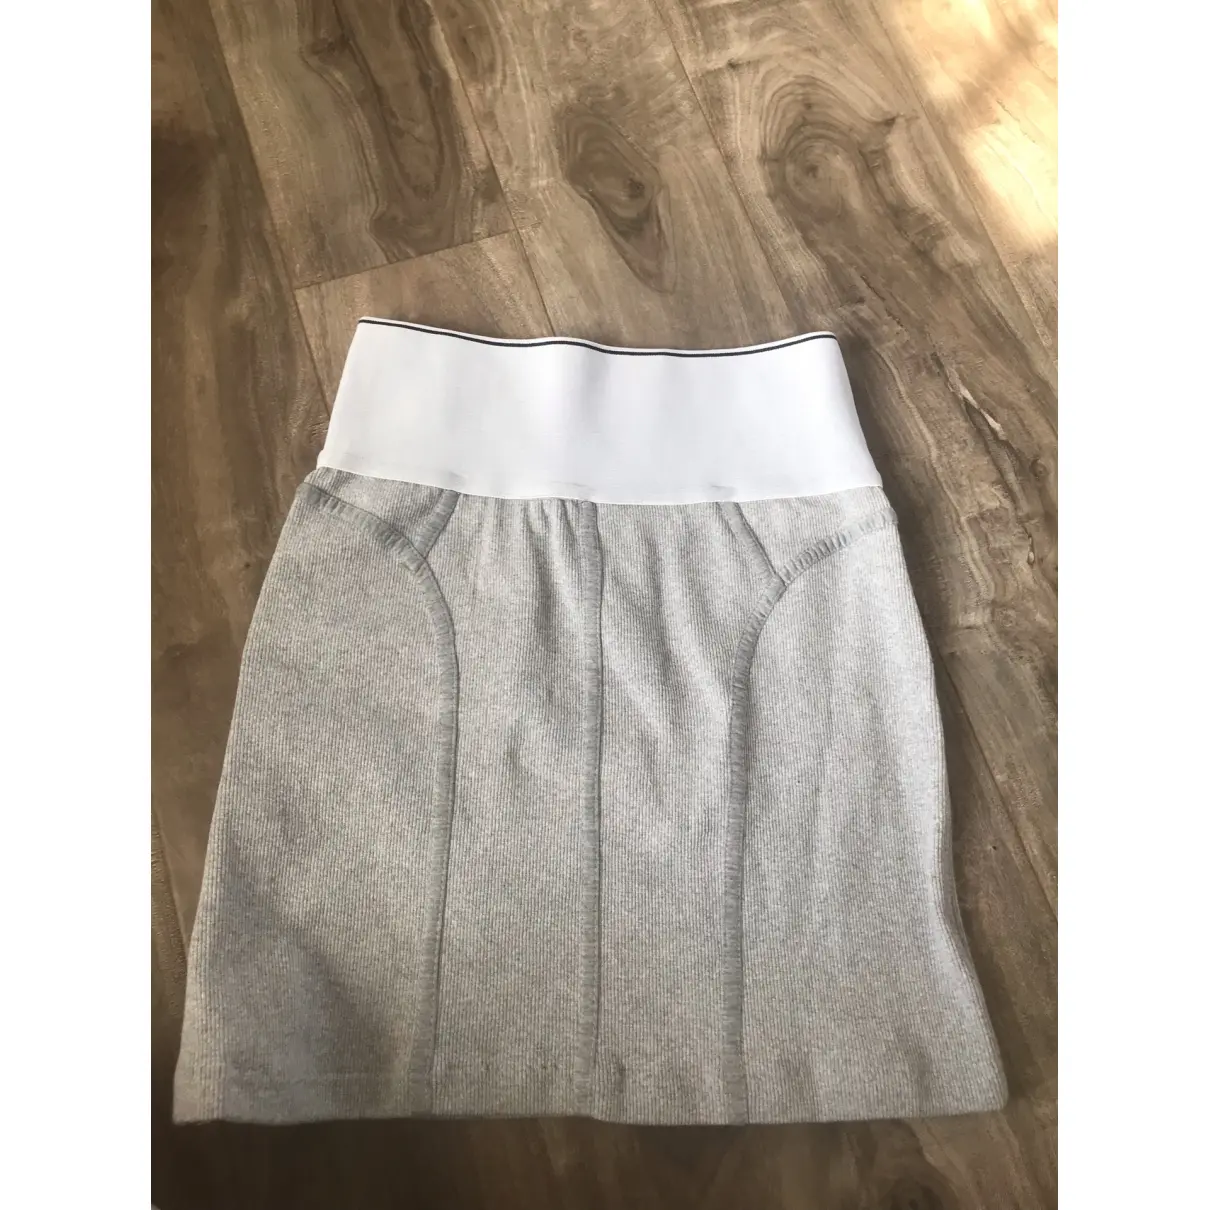 Buy Alexander Wang Mini skirt online